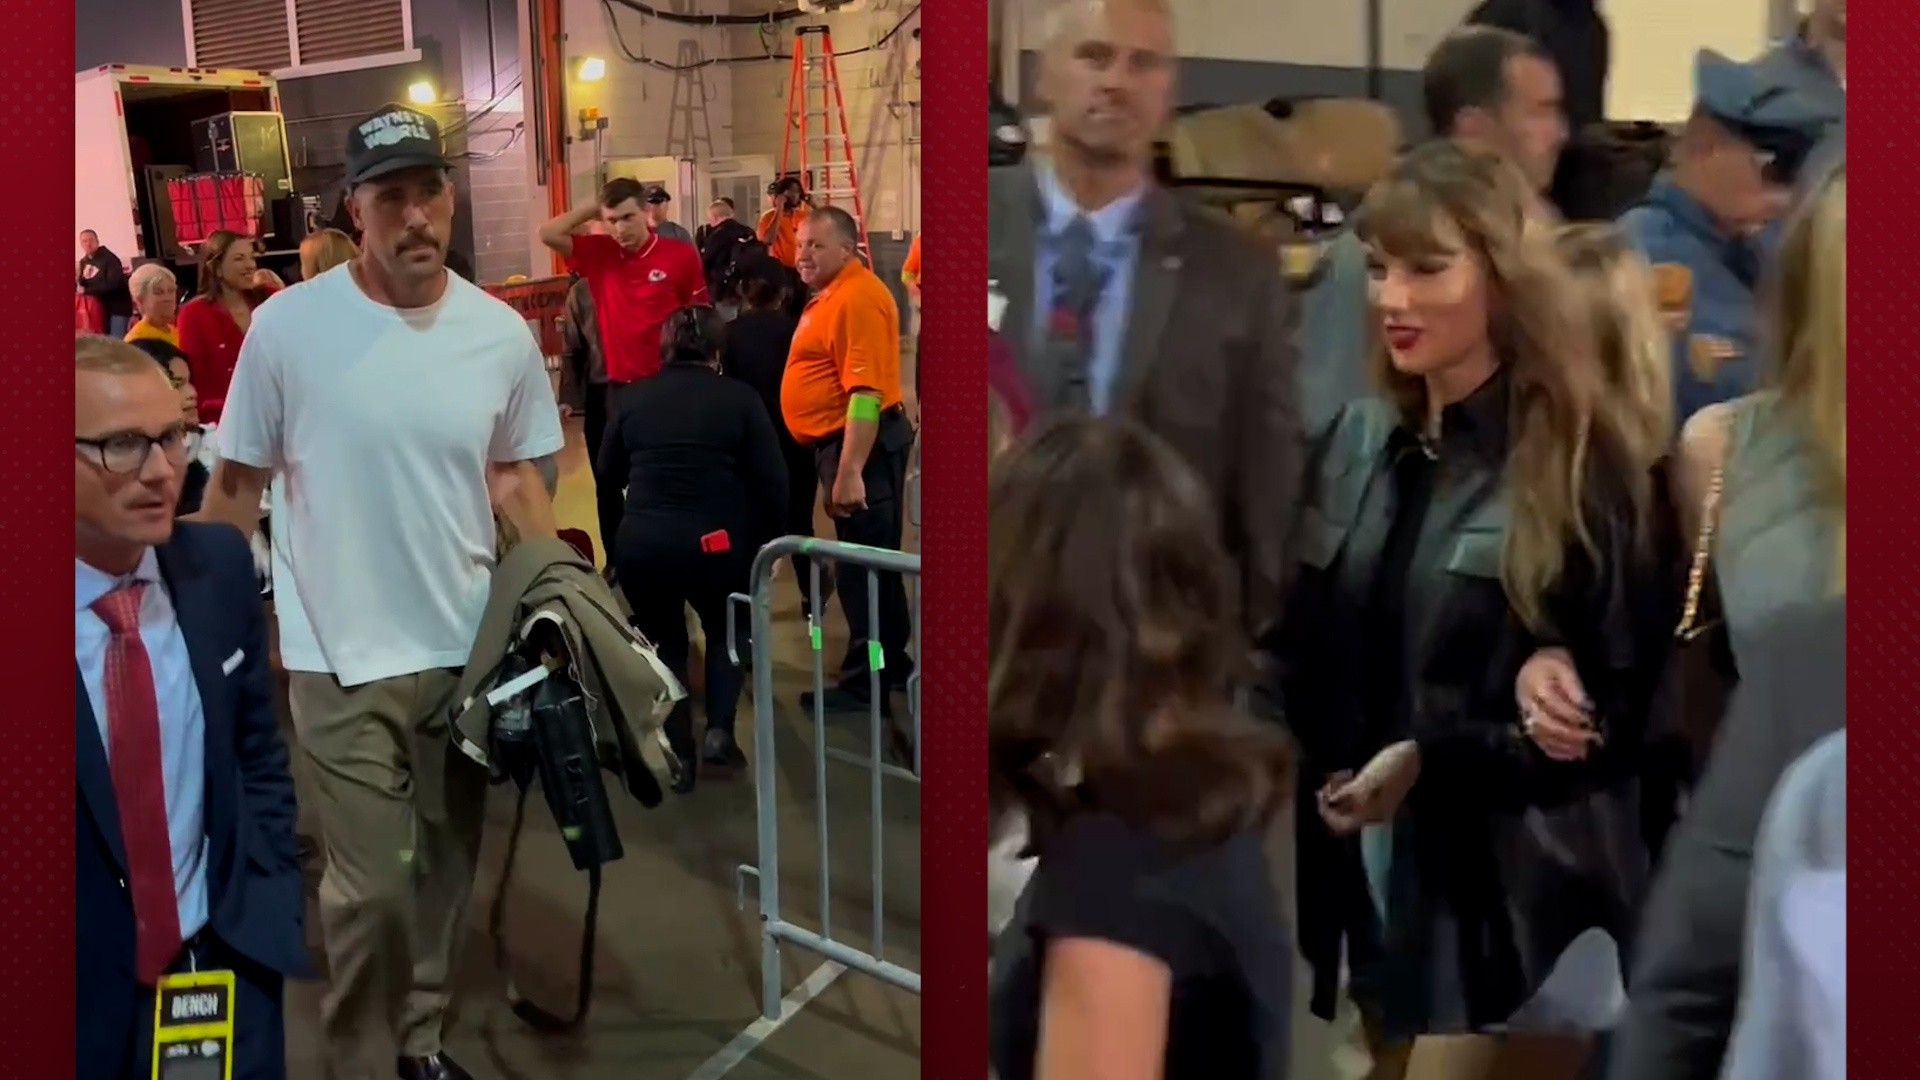 Taylor Swift attends Travis Kelce's Chiefs vs. Jets: Photos